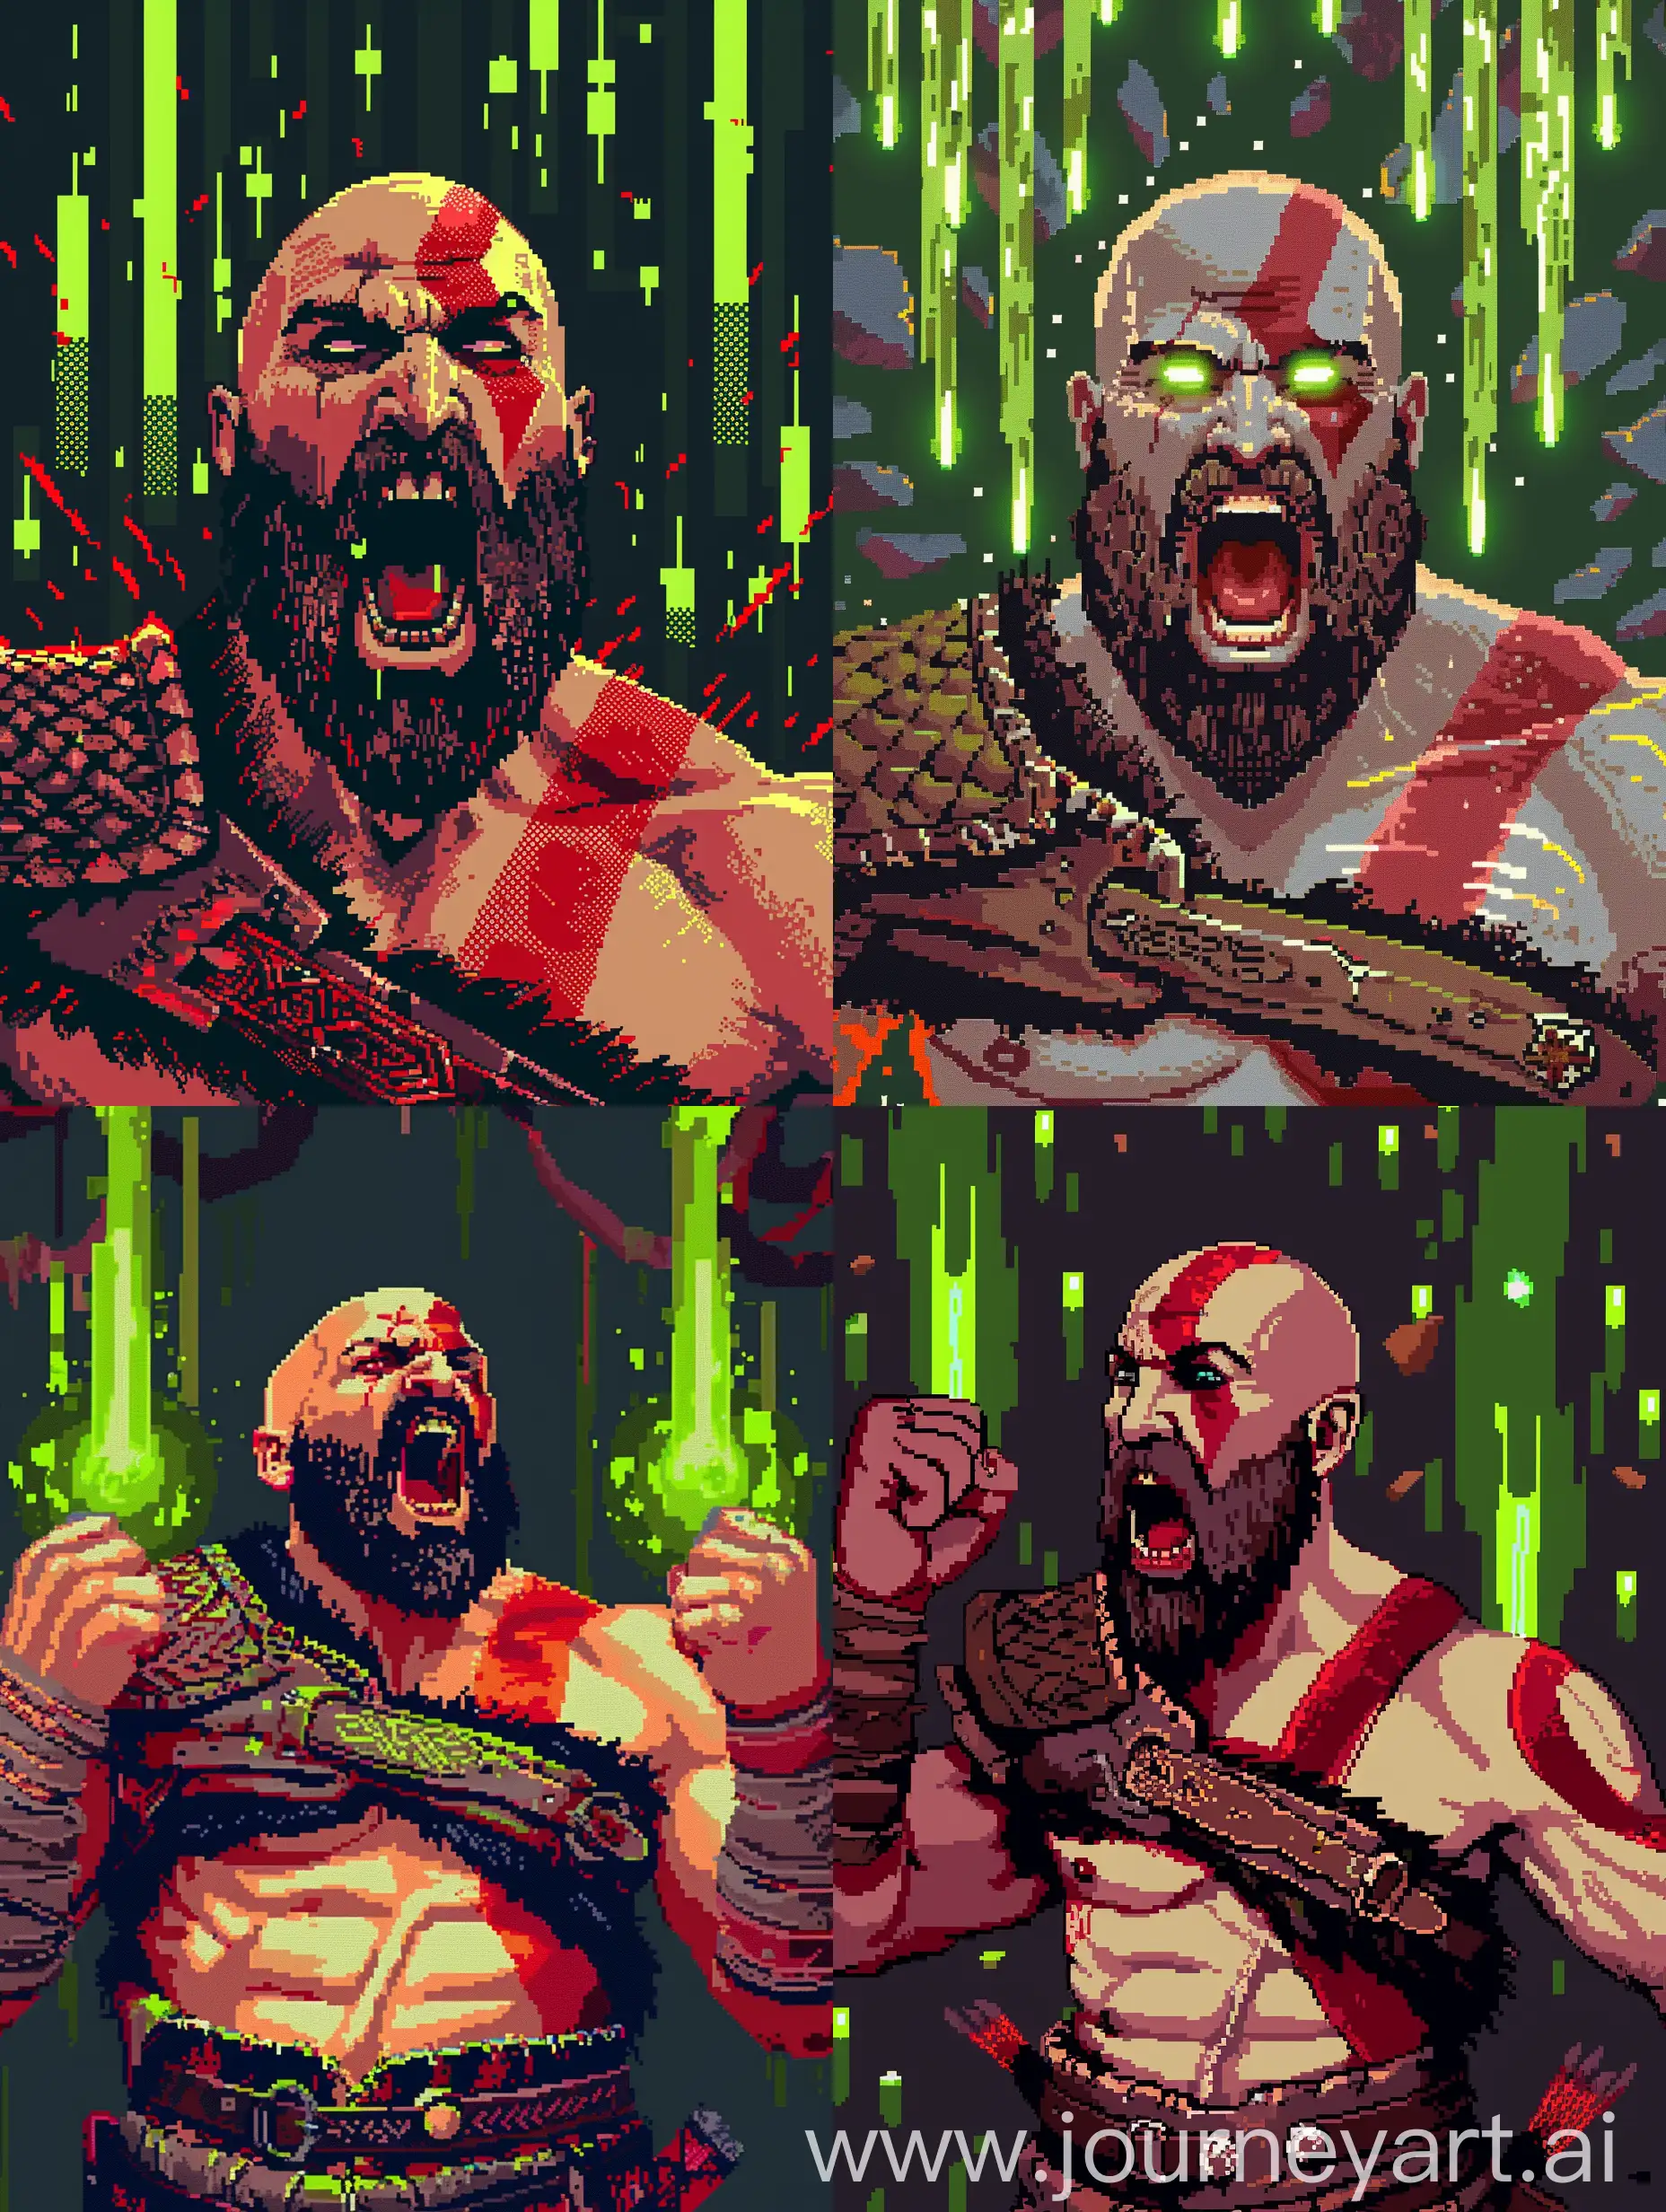 Pixel-Art-16-Bit-Kratos-Shouting-Trading-Advice-with-Green-Candles